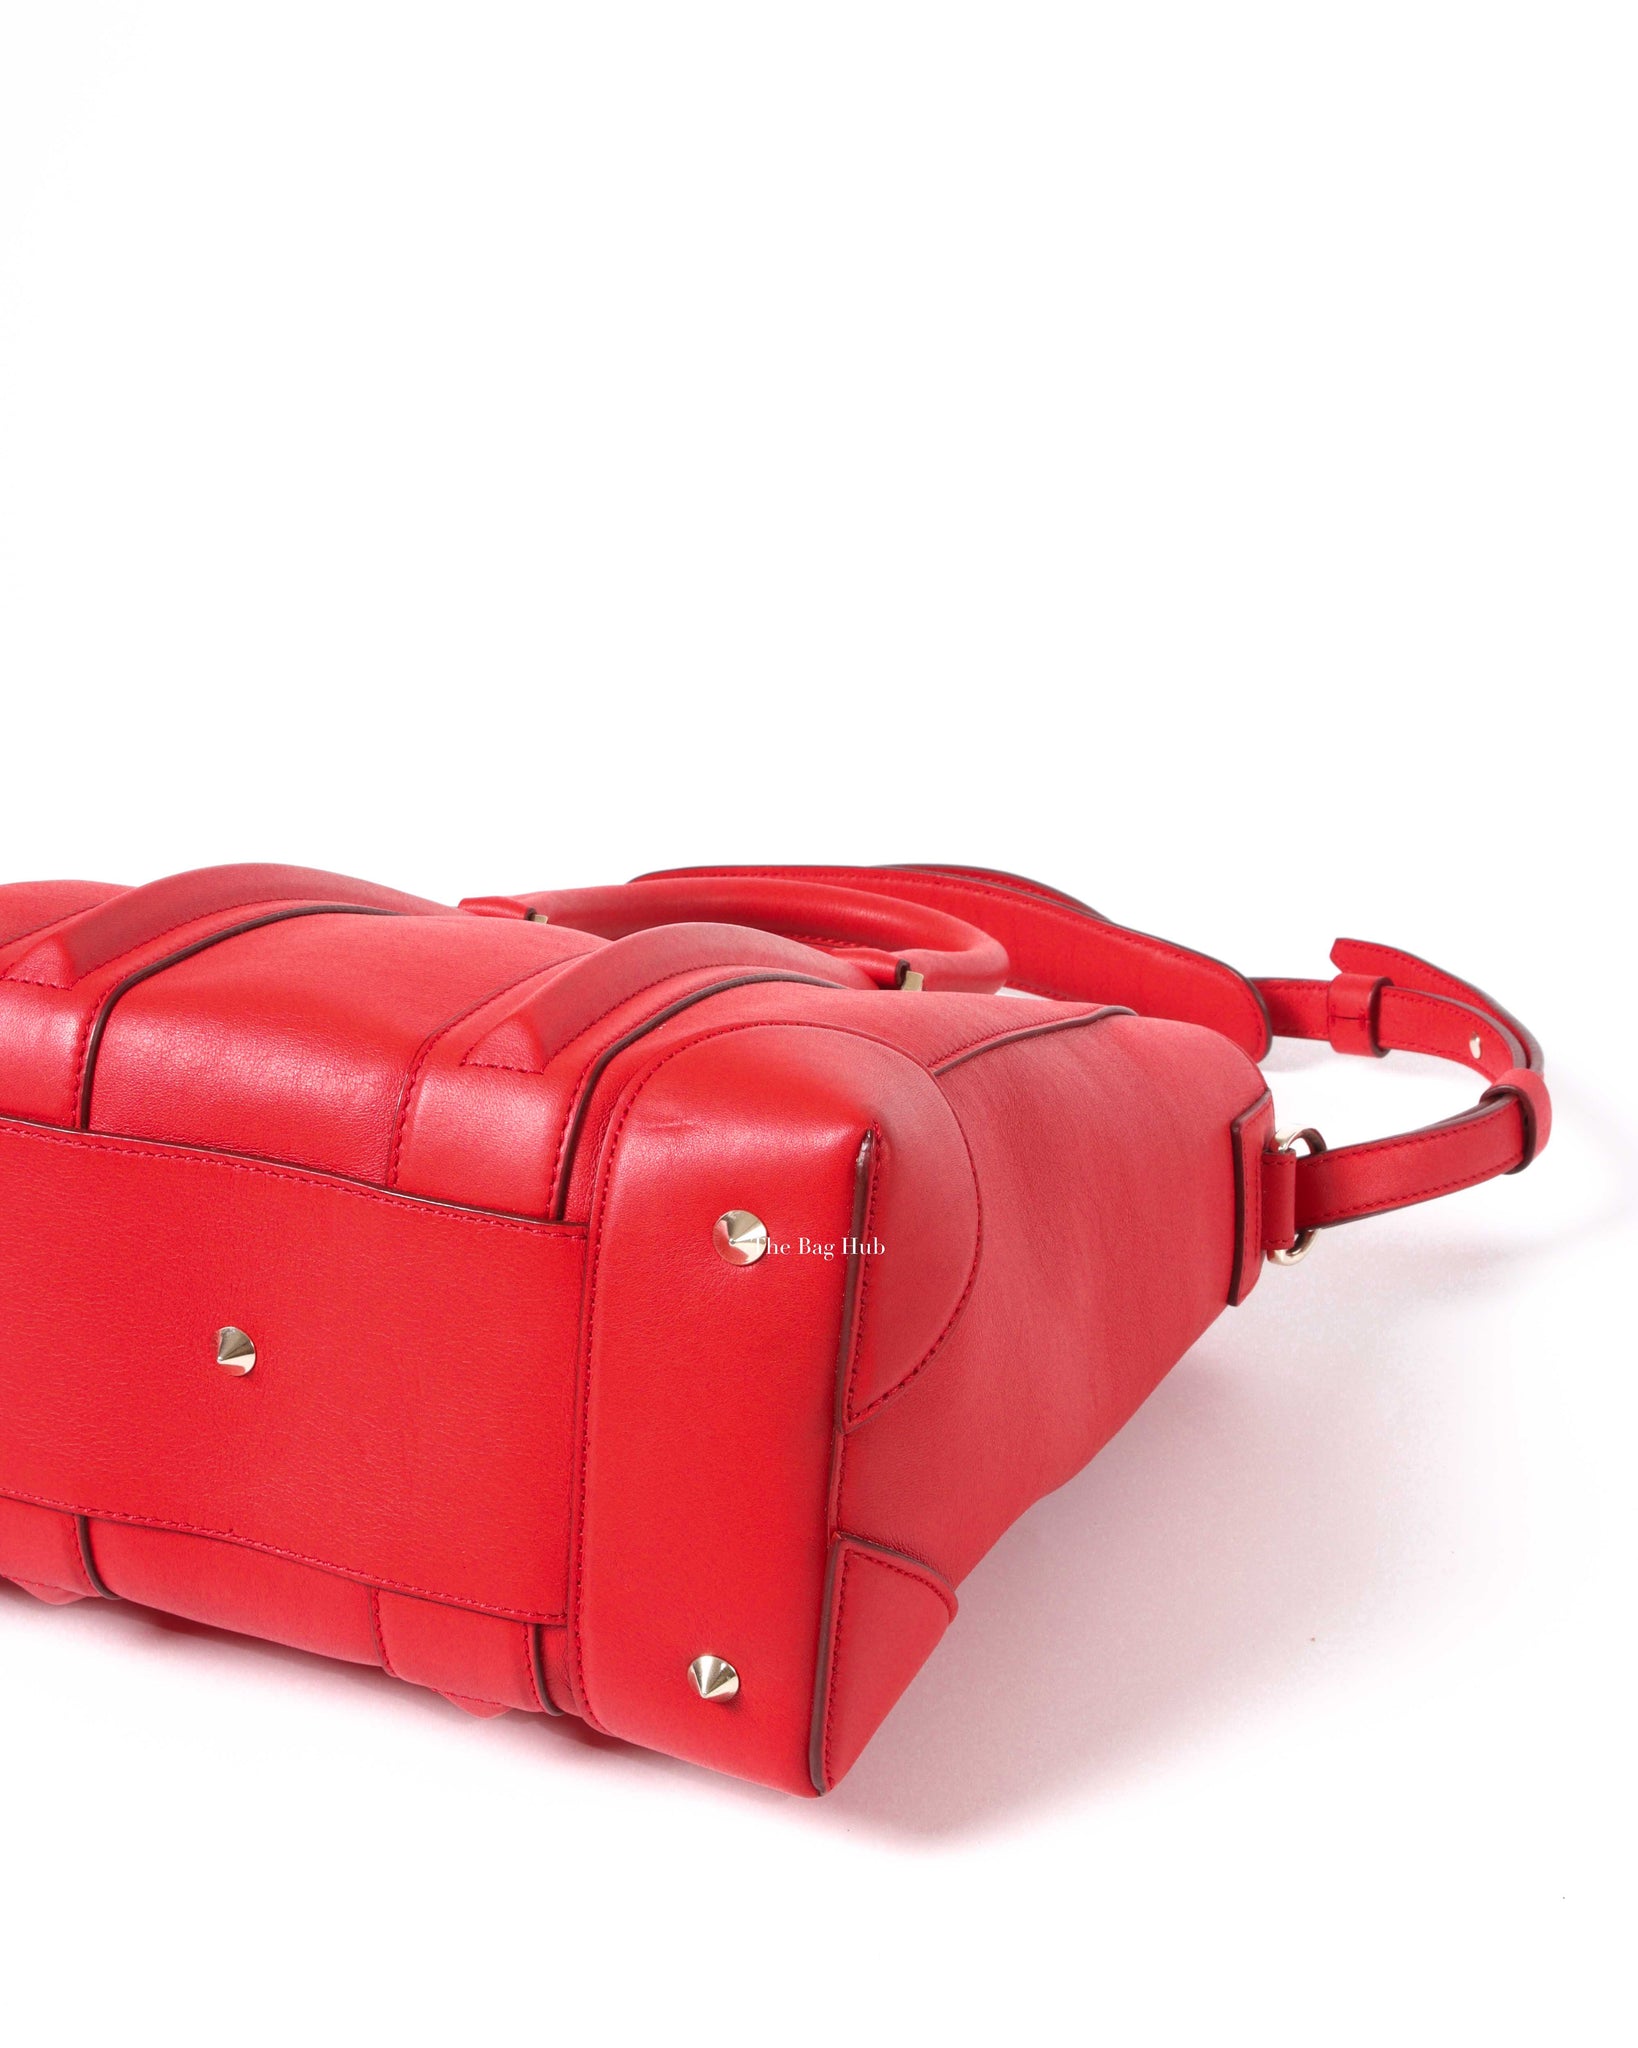 Givenchy Red Lucrezia Convertible Bag-8